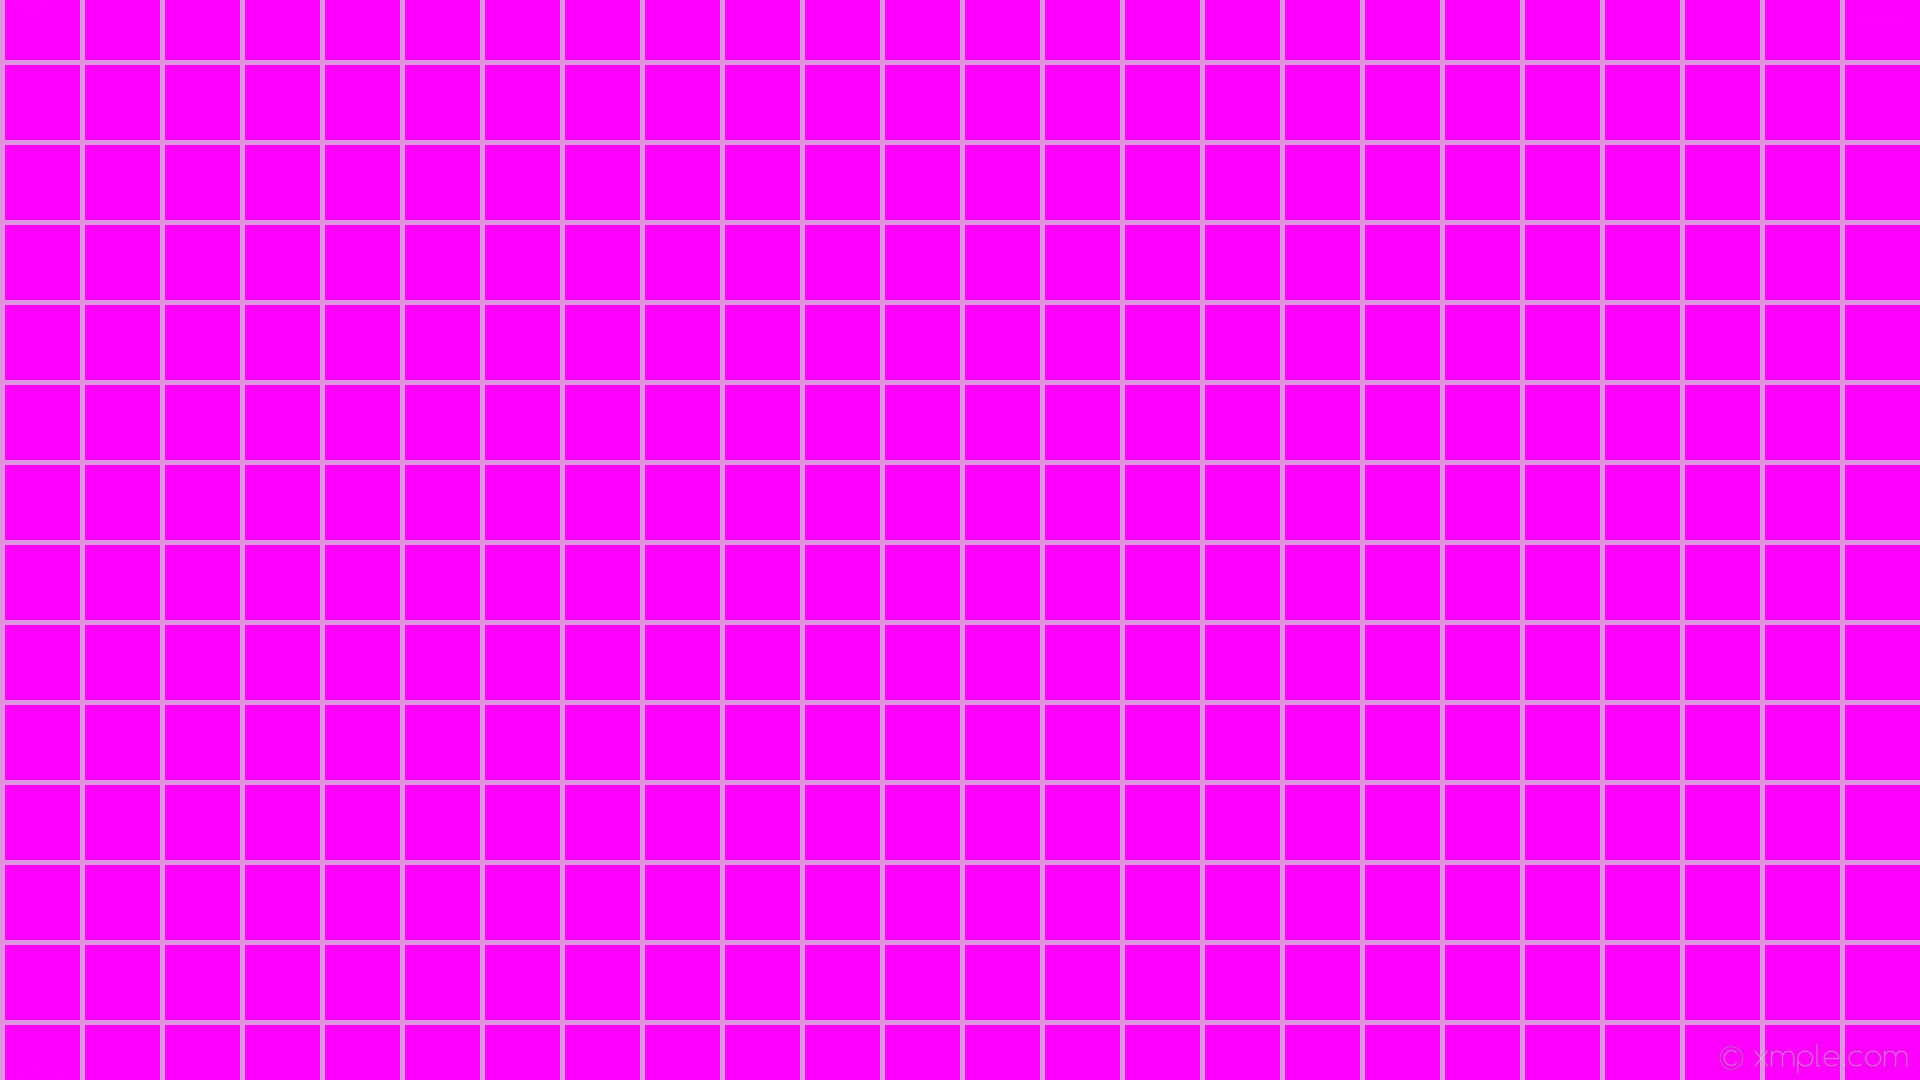 1920x1080 wallpaper graph paper purple grid grey magenta light gray #ff00ff #d3d3d3  0Â° 5px